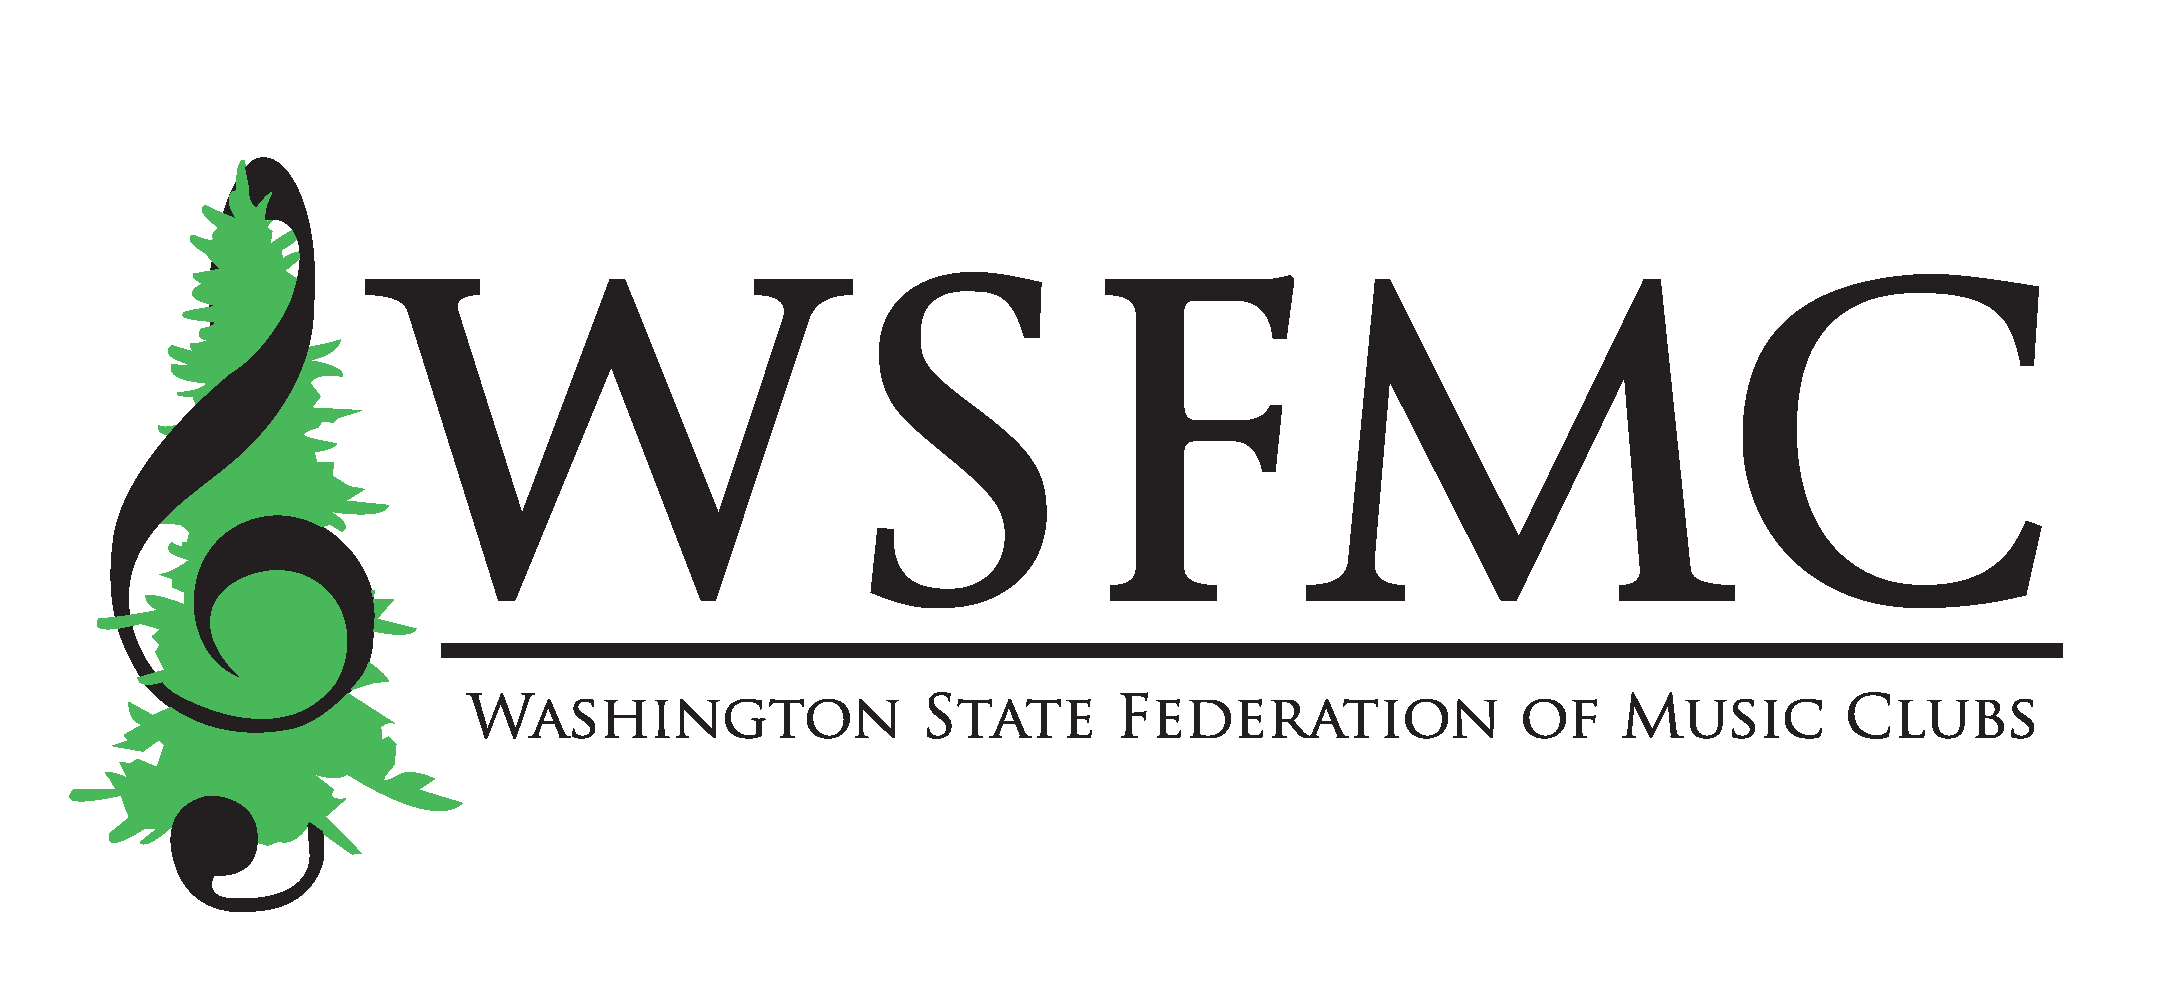 Washington State Federation of Music Clubs Logo Sponsor